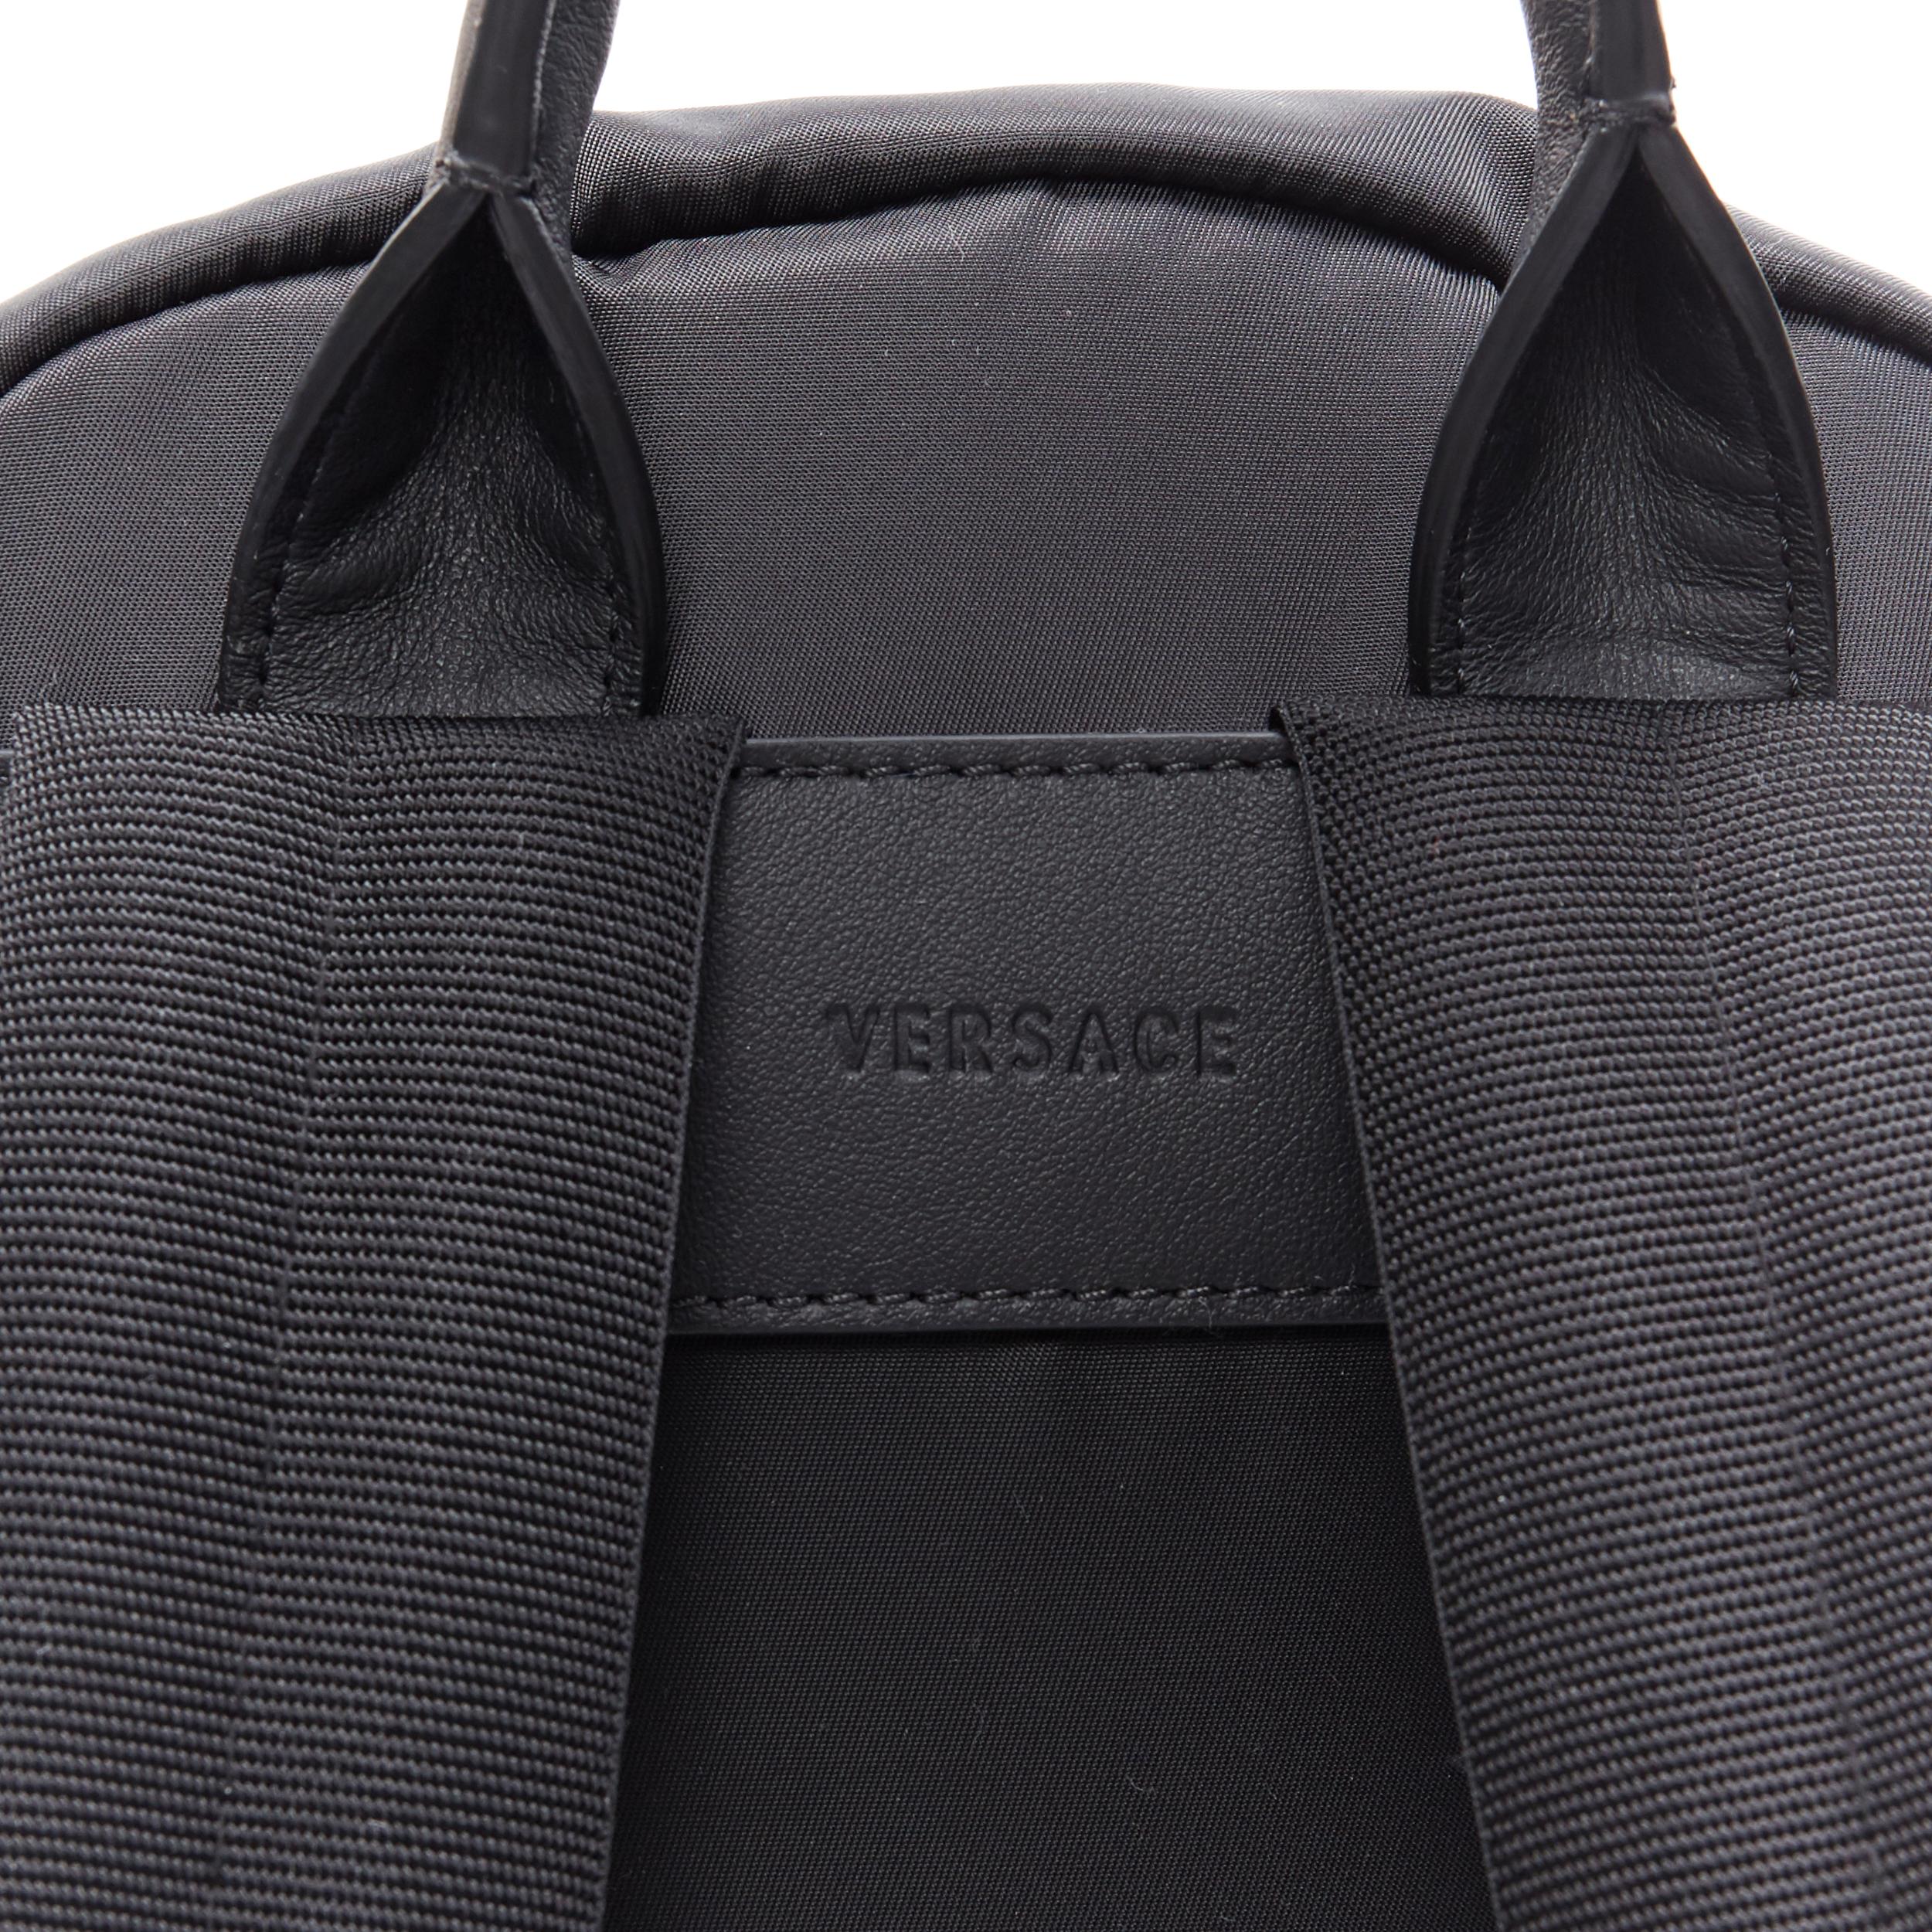 new VERSACE Palazzo Medusa black nylon Greca stitch front pocket backpack 4